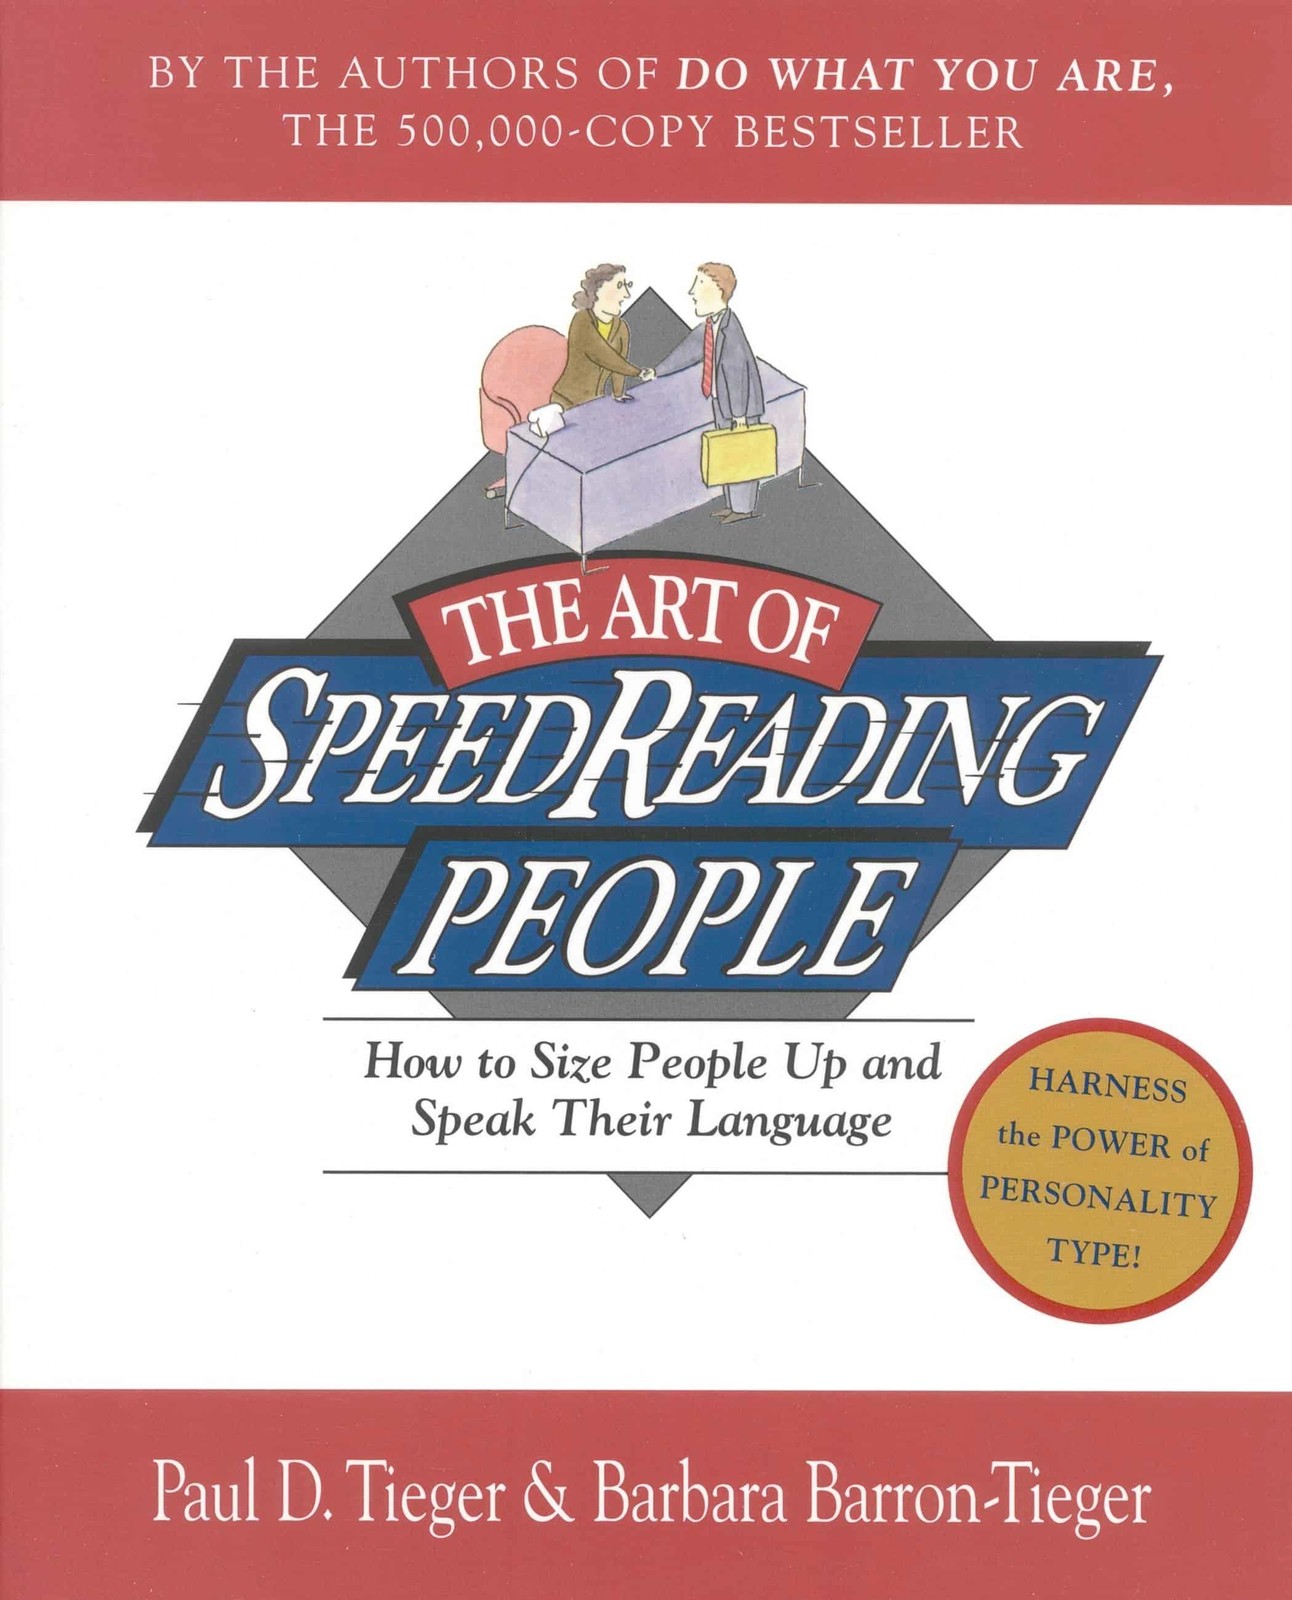 2- فن القراءة السريعة للناس: كيفية قياس حجم الناس والتحدث بلغتهم (The Art of Speed Reading People: How to Size People Up and Speak Their Language)